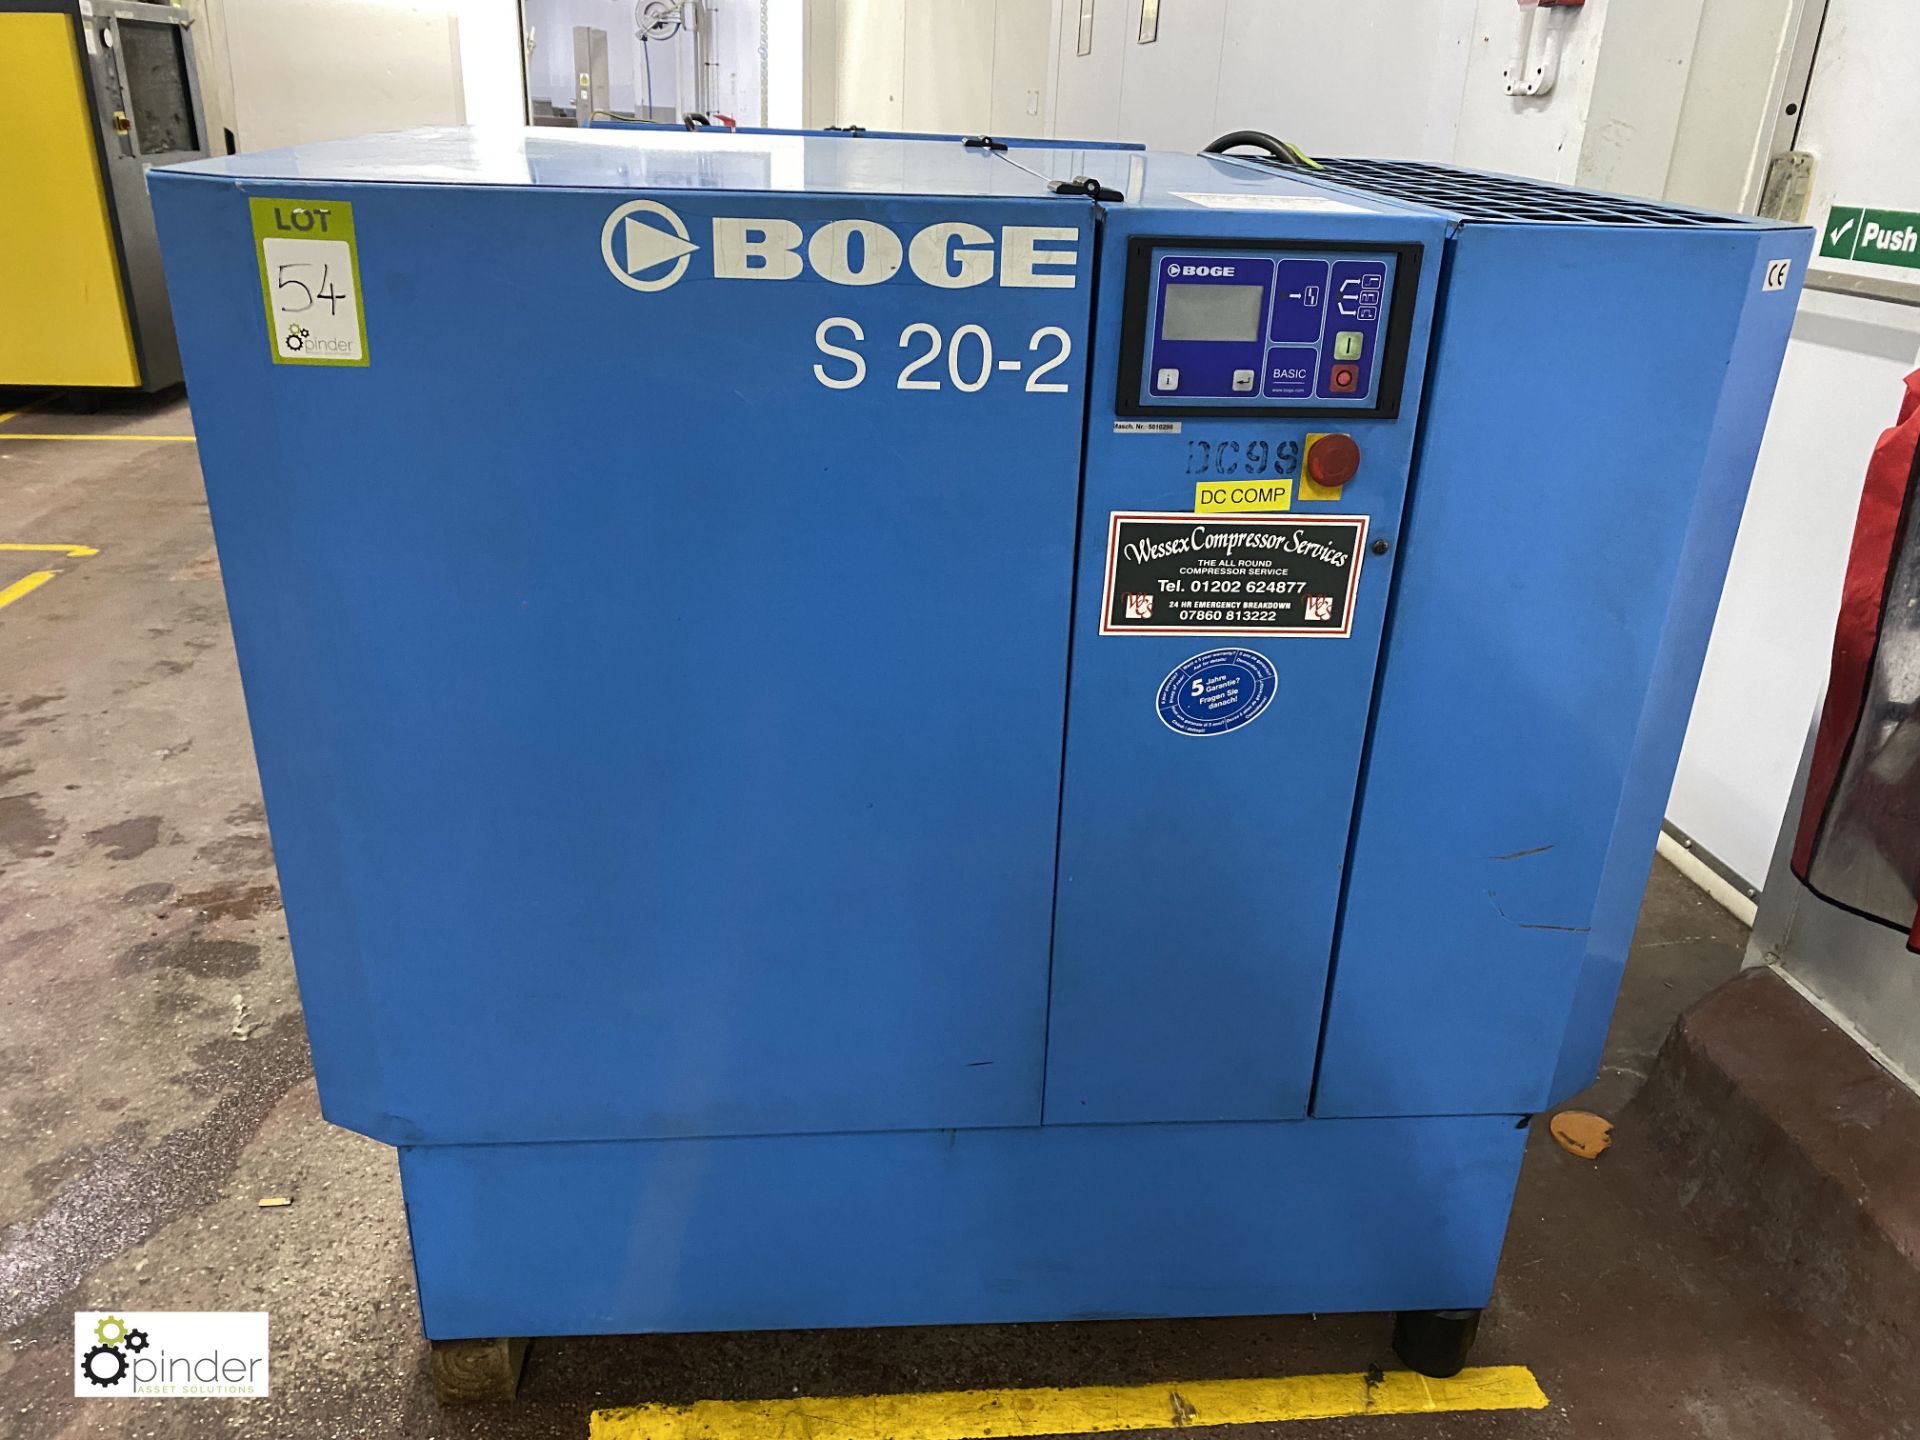 Boge S20-2 Packaged Air Compressor, swp 8bar, 15kw motor, year 2007, serial number 5010296,